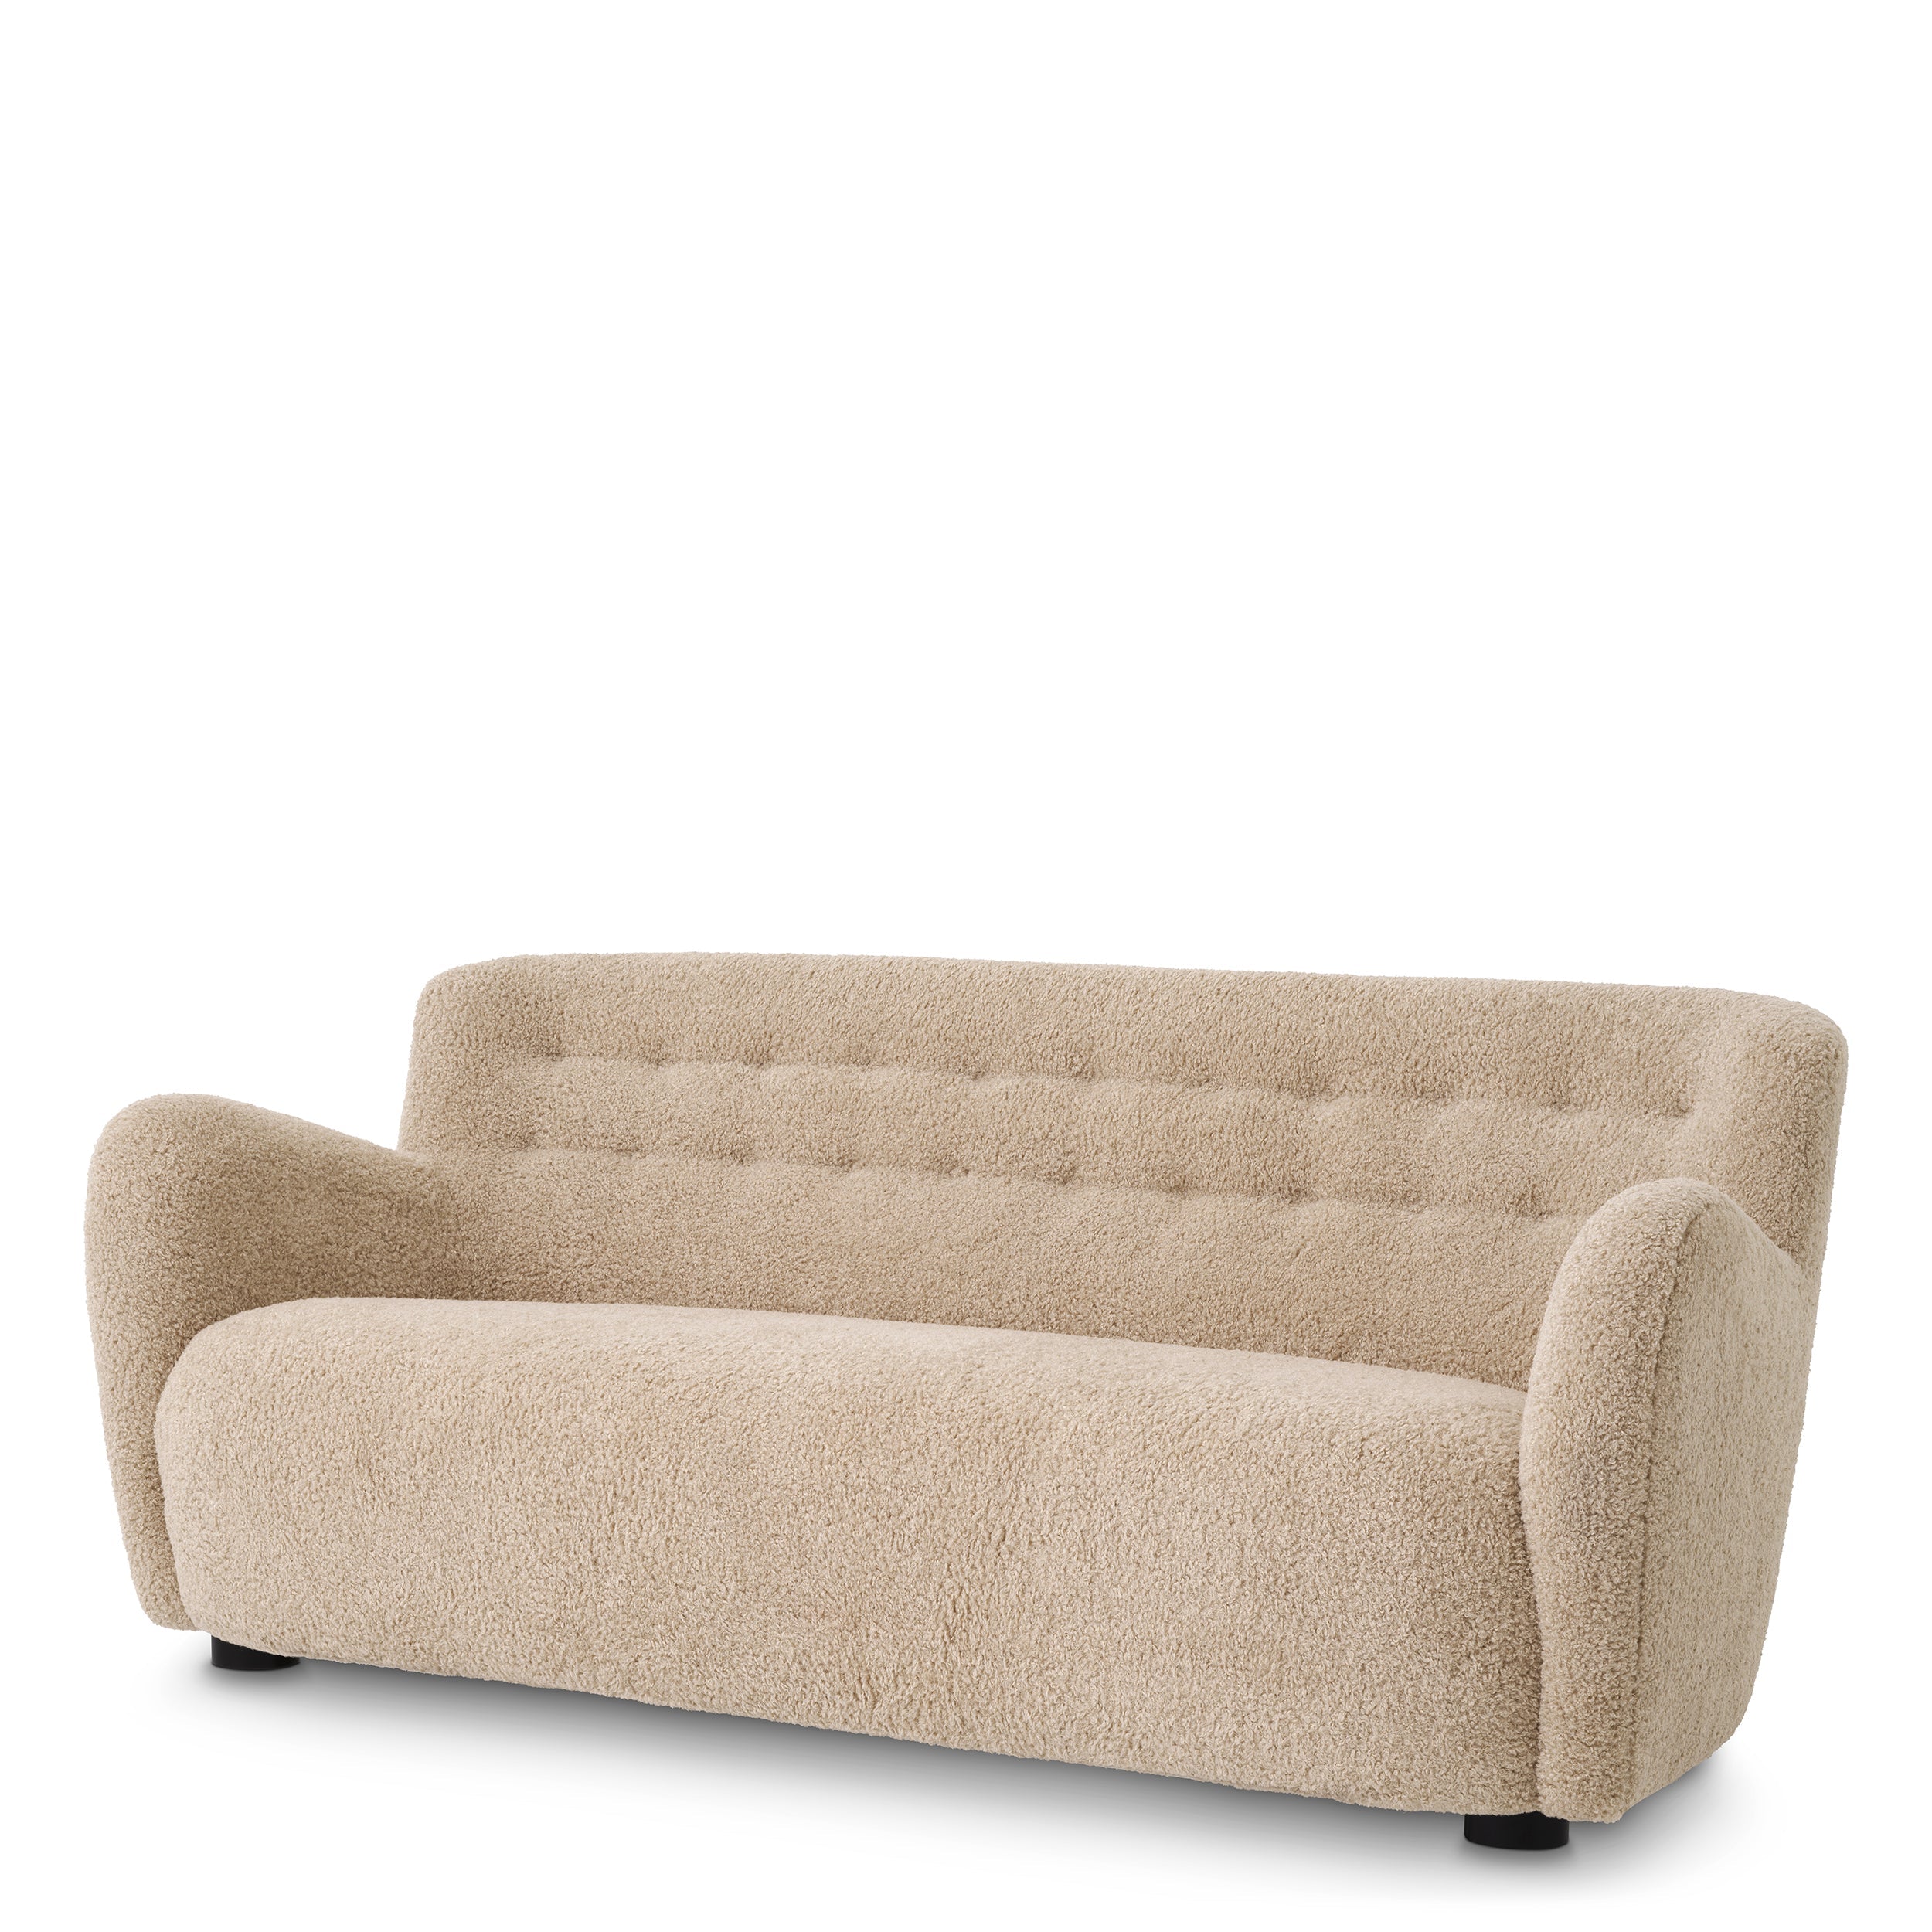 Bixby Sofa - THAT COOL LIVING